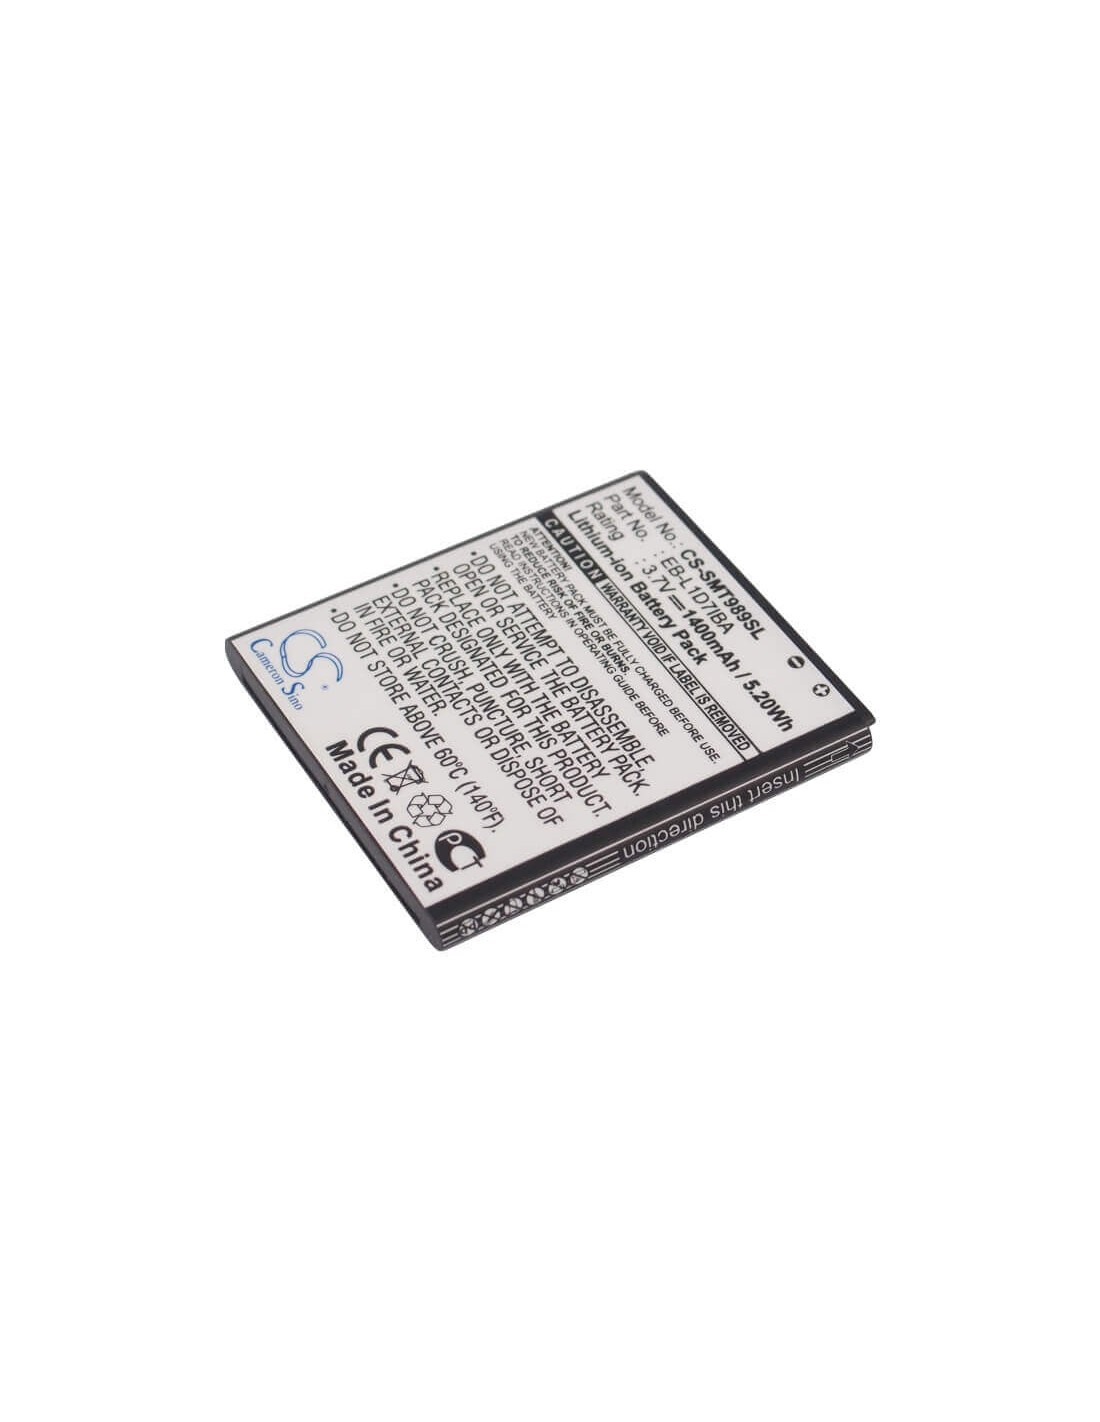 Battery for Samsung Galaxy S Hercules, SGH-T989, Skyrocket 3.7V, 1400mAh - 5.18Wh